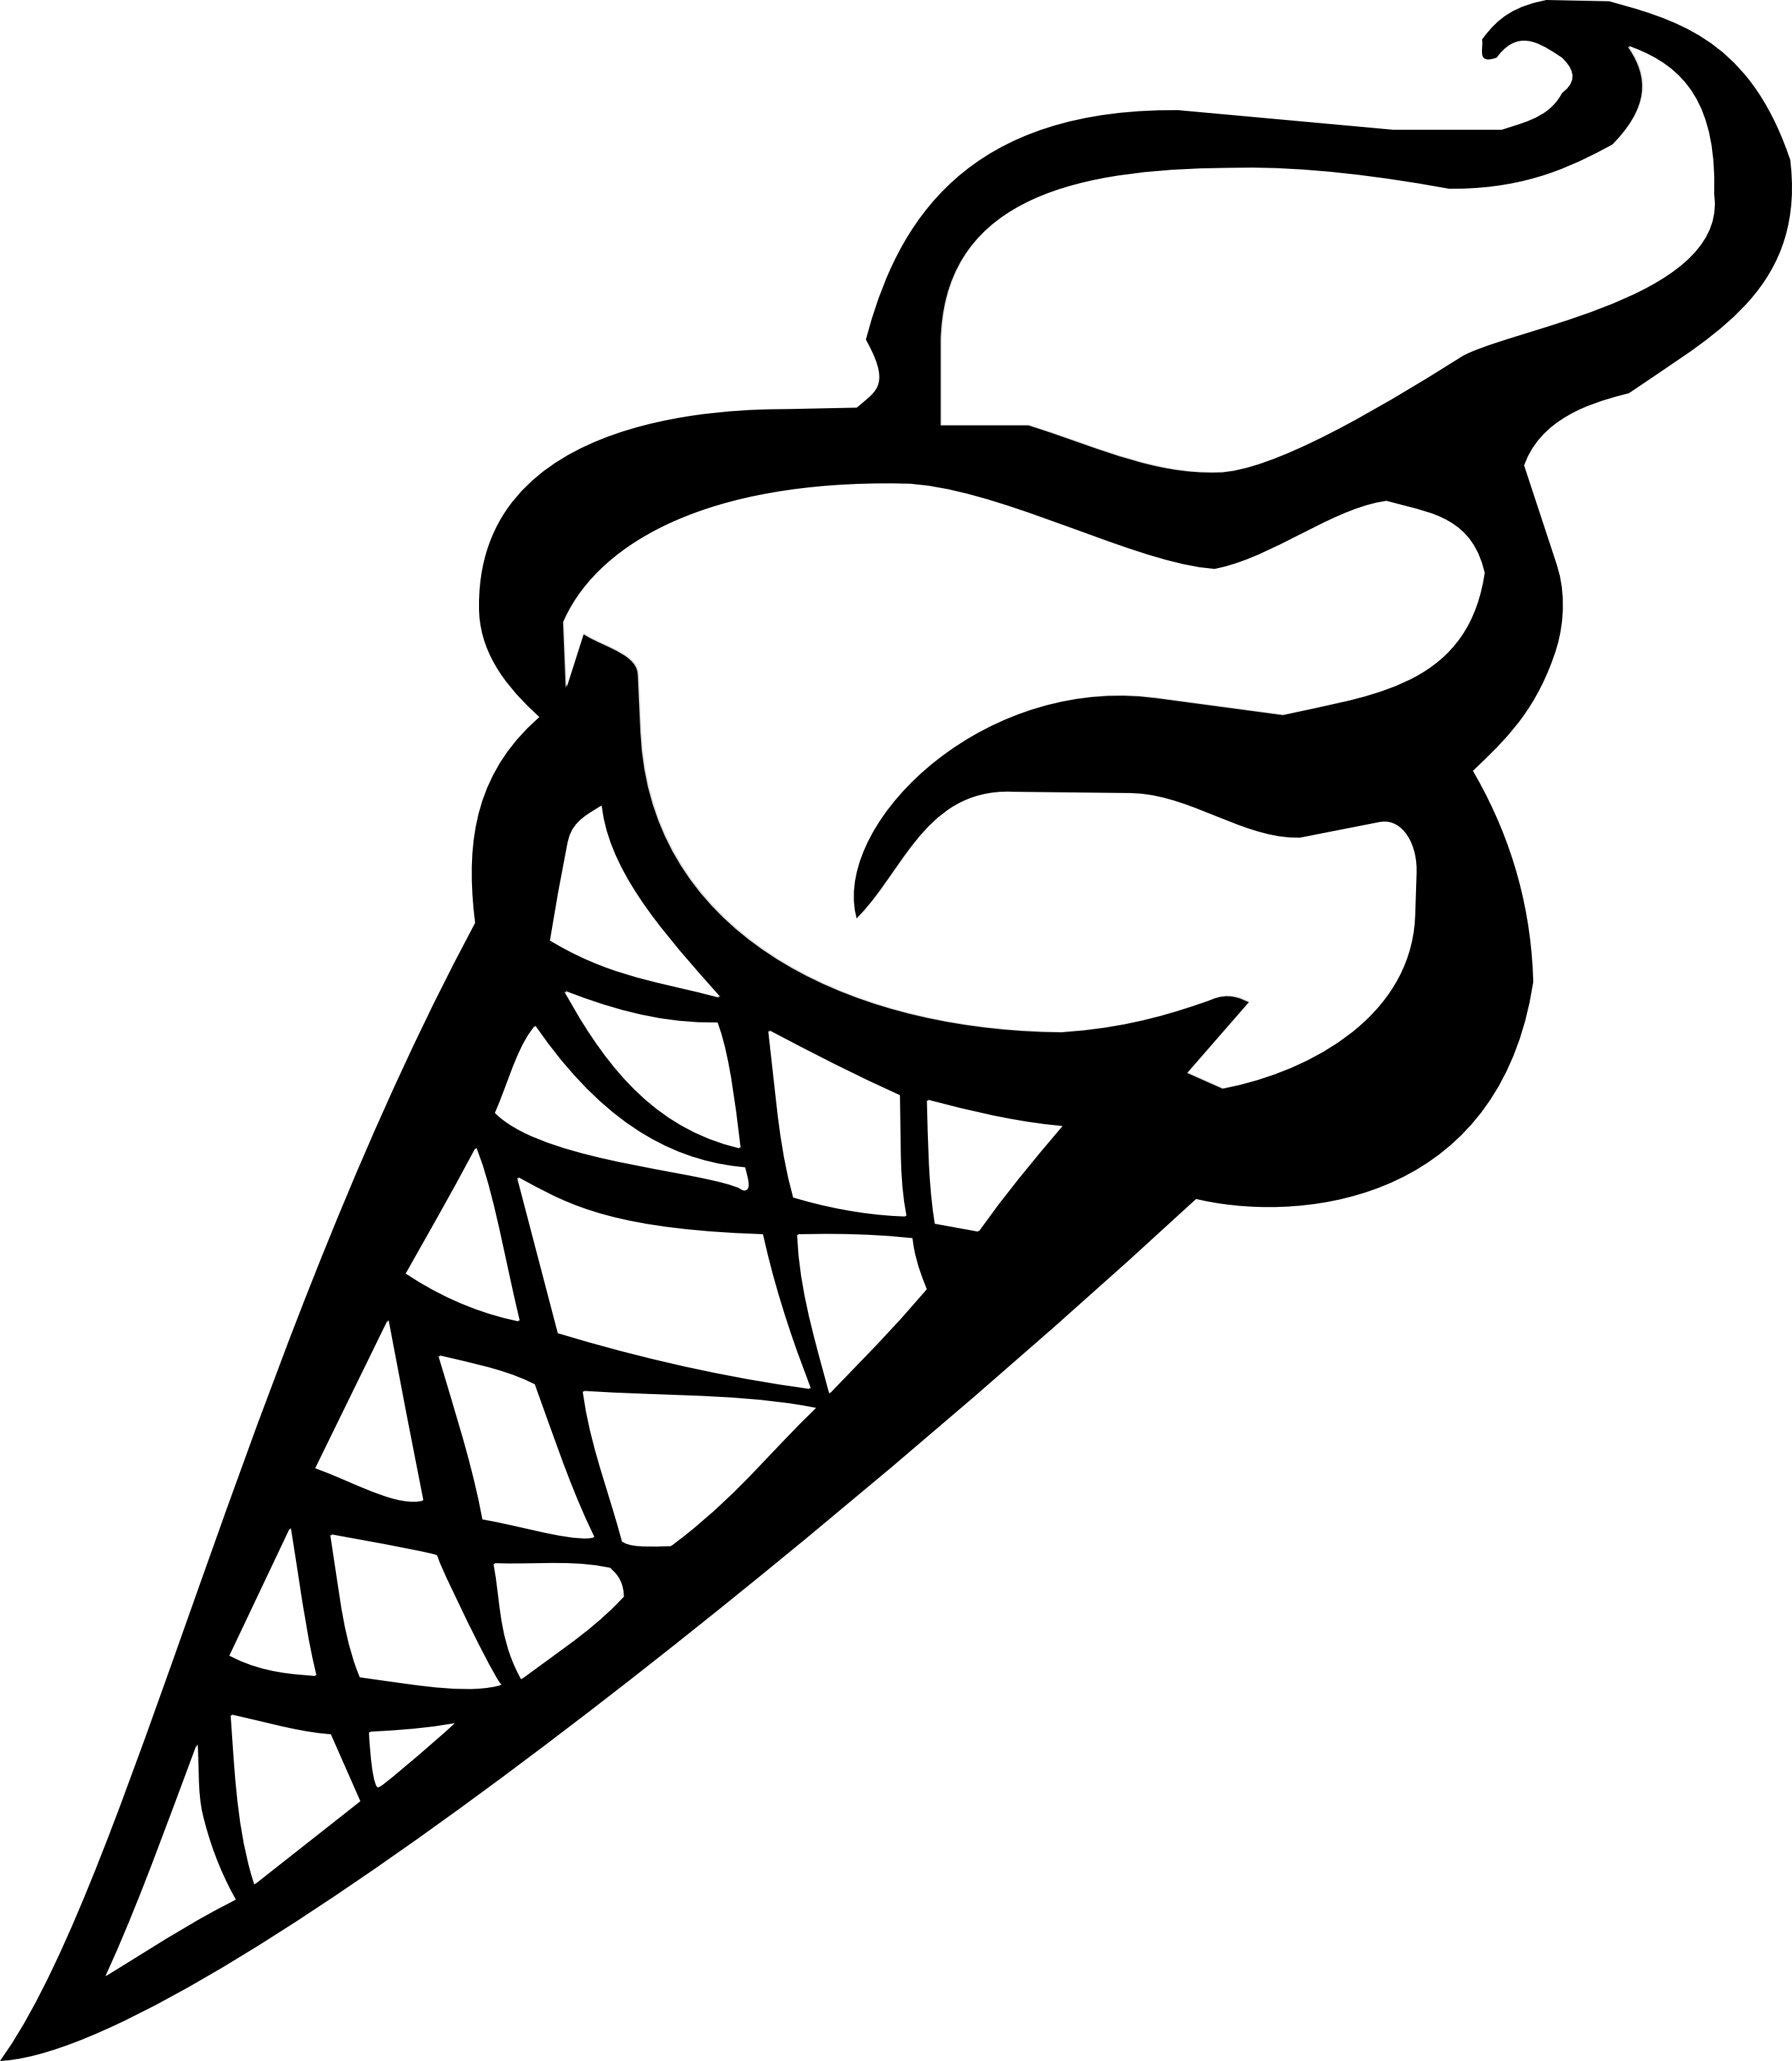 Ice Cream Cone Clipart | Clipart Panda - Free Clipart Images